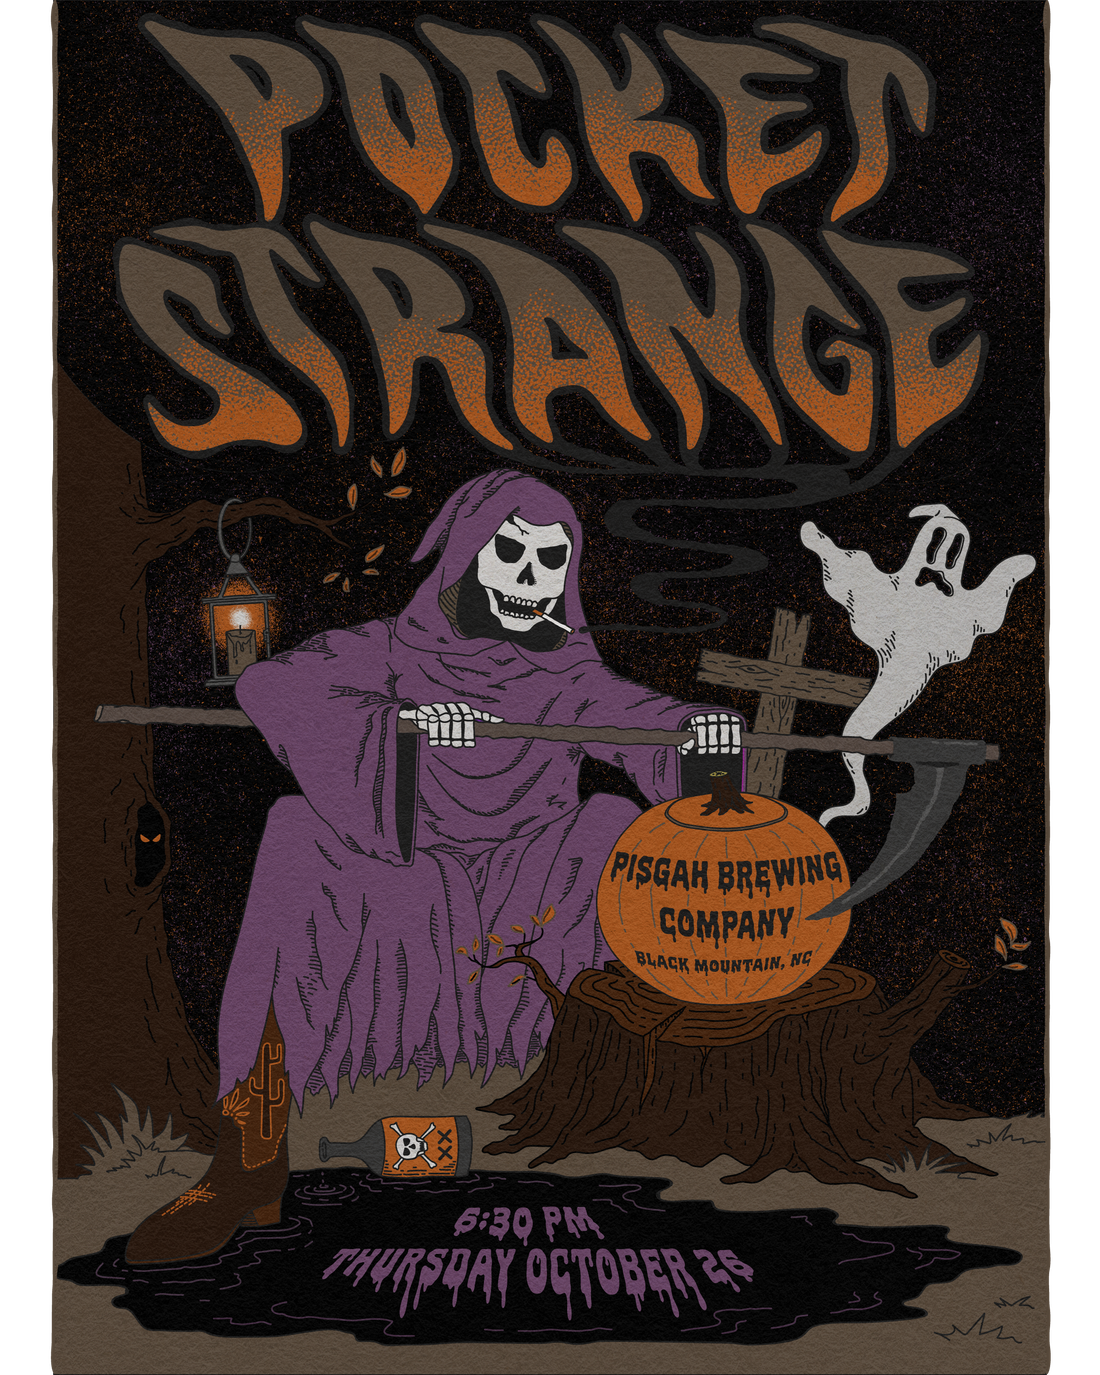 October 26, 2023. Pocket Strange at Pisgah Brewing Company in Black Mountain, NC. Halloween Show.
